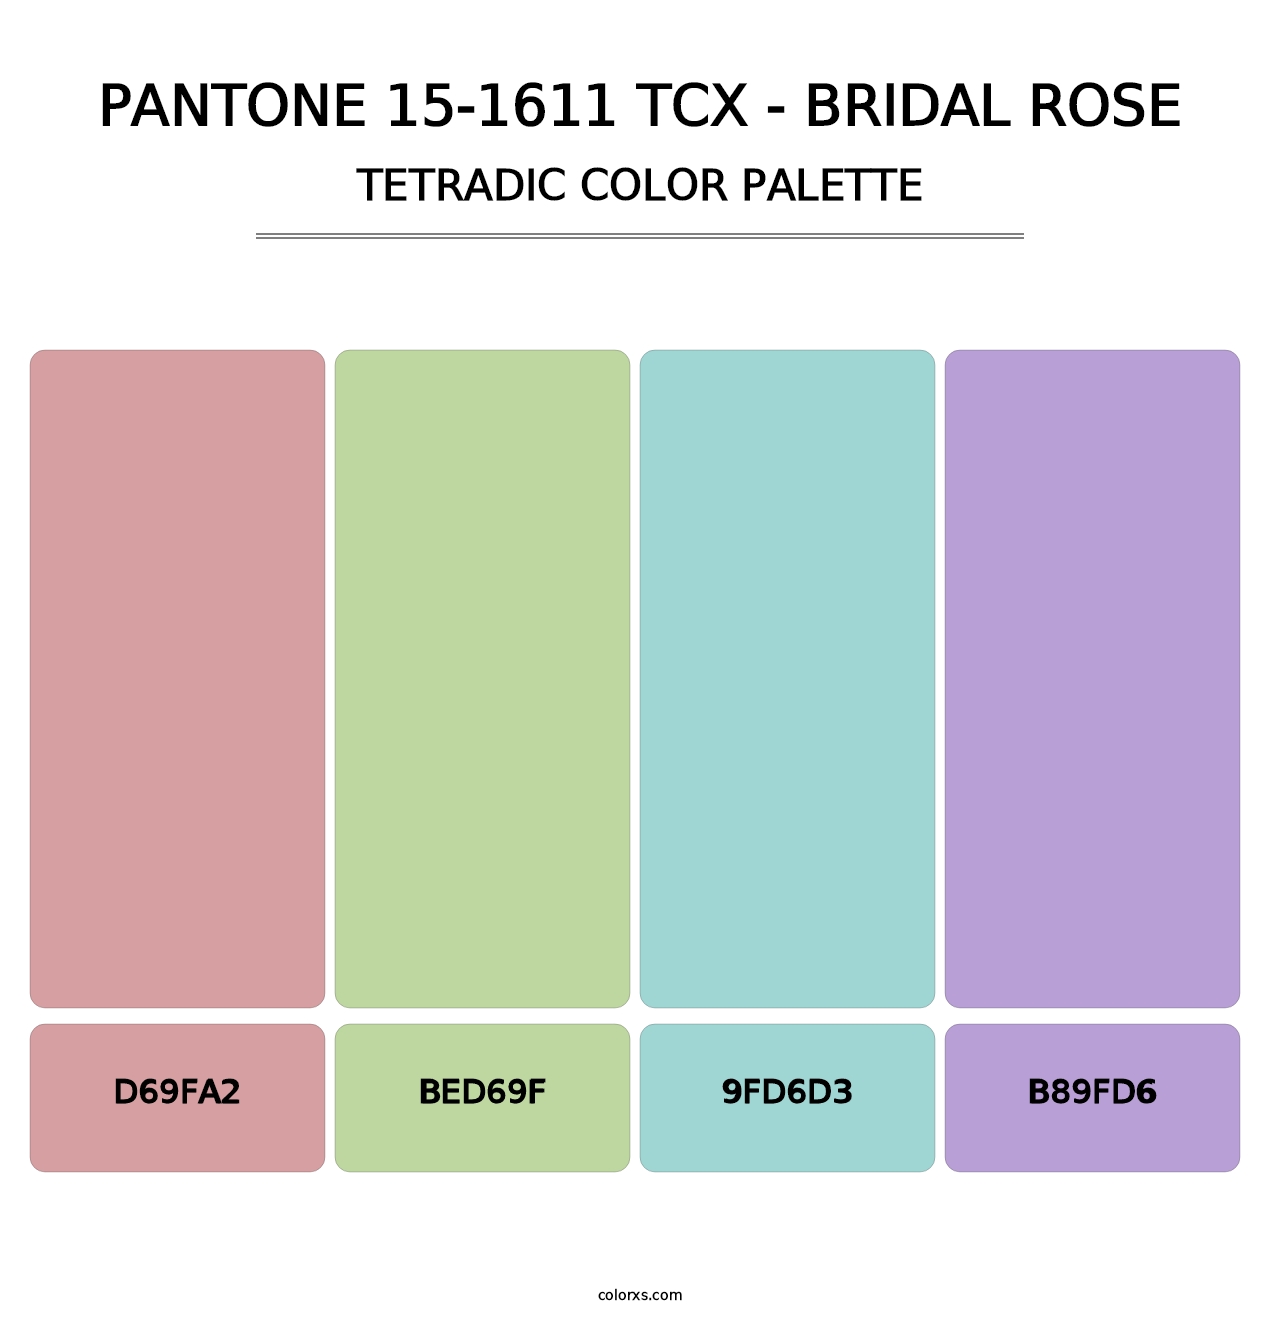 PANTONE 15-1611 TCX - Bridal Rose - Tetradic Color Palette